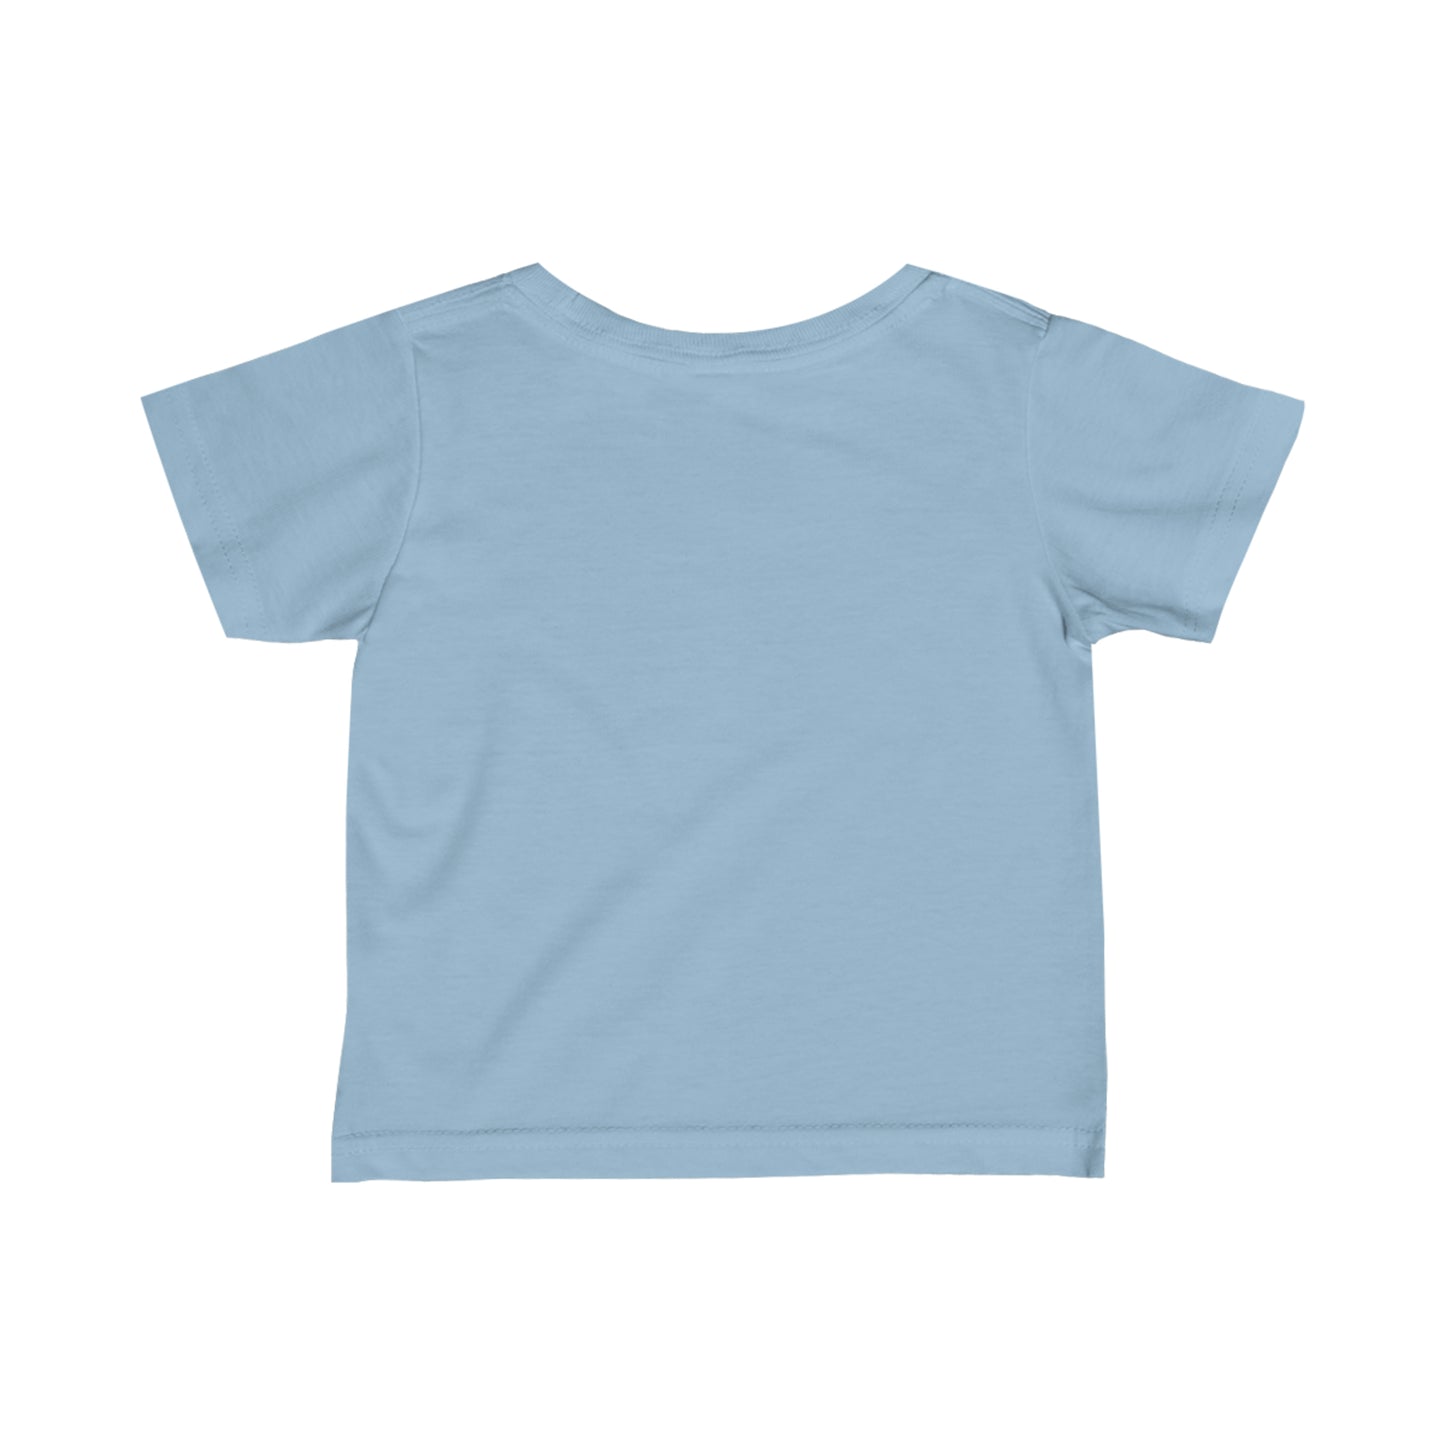 Original Security Infant T-Shirt